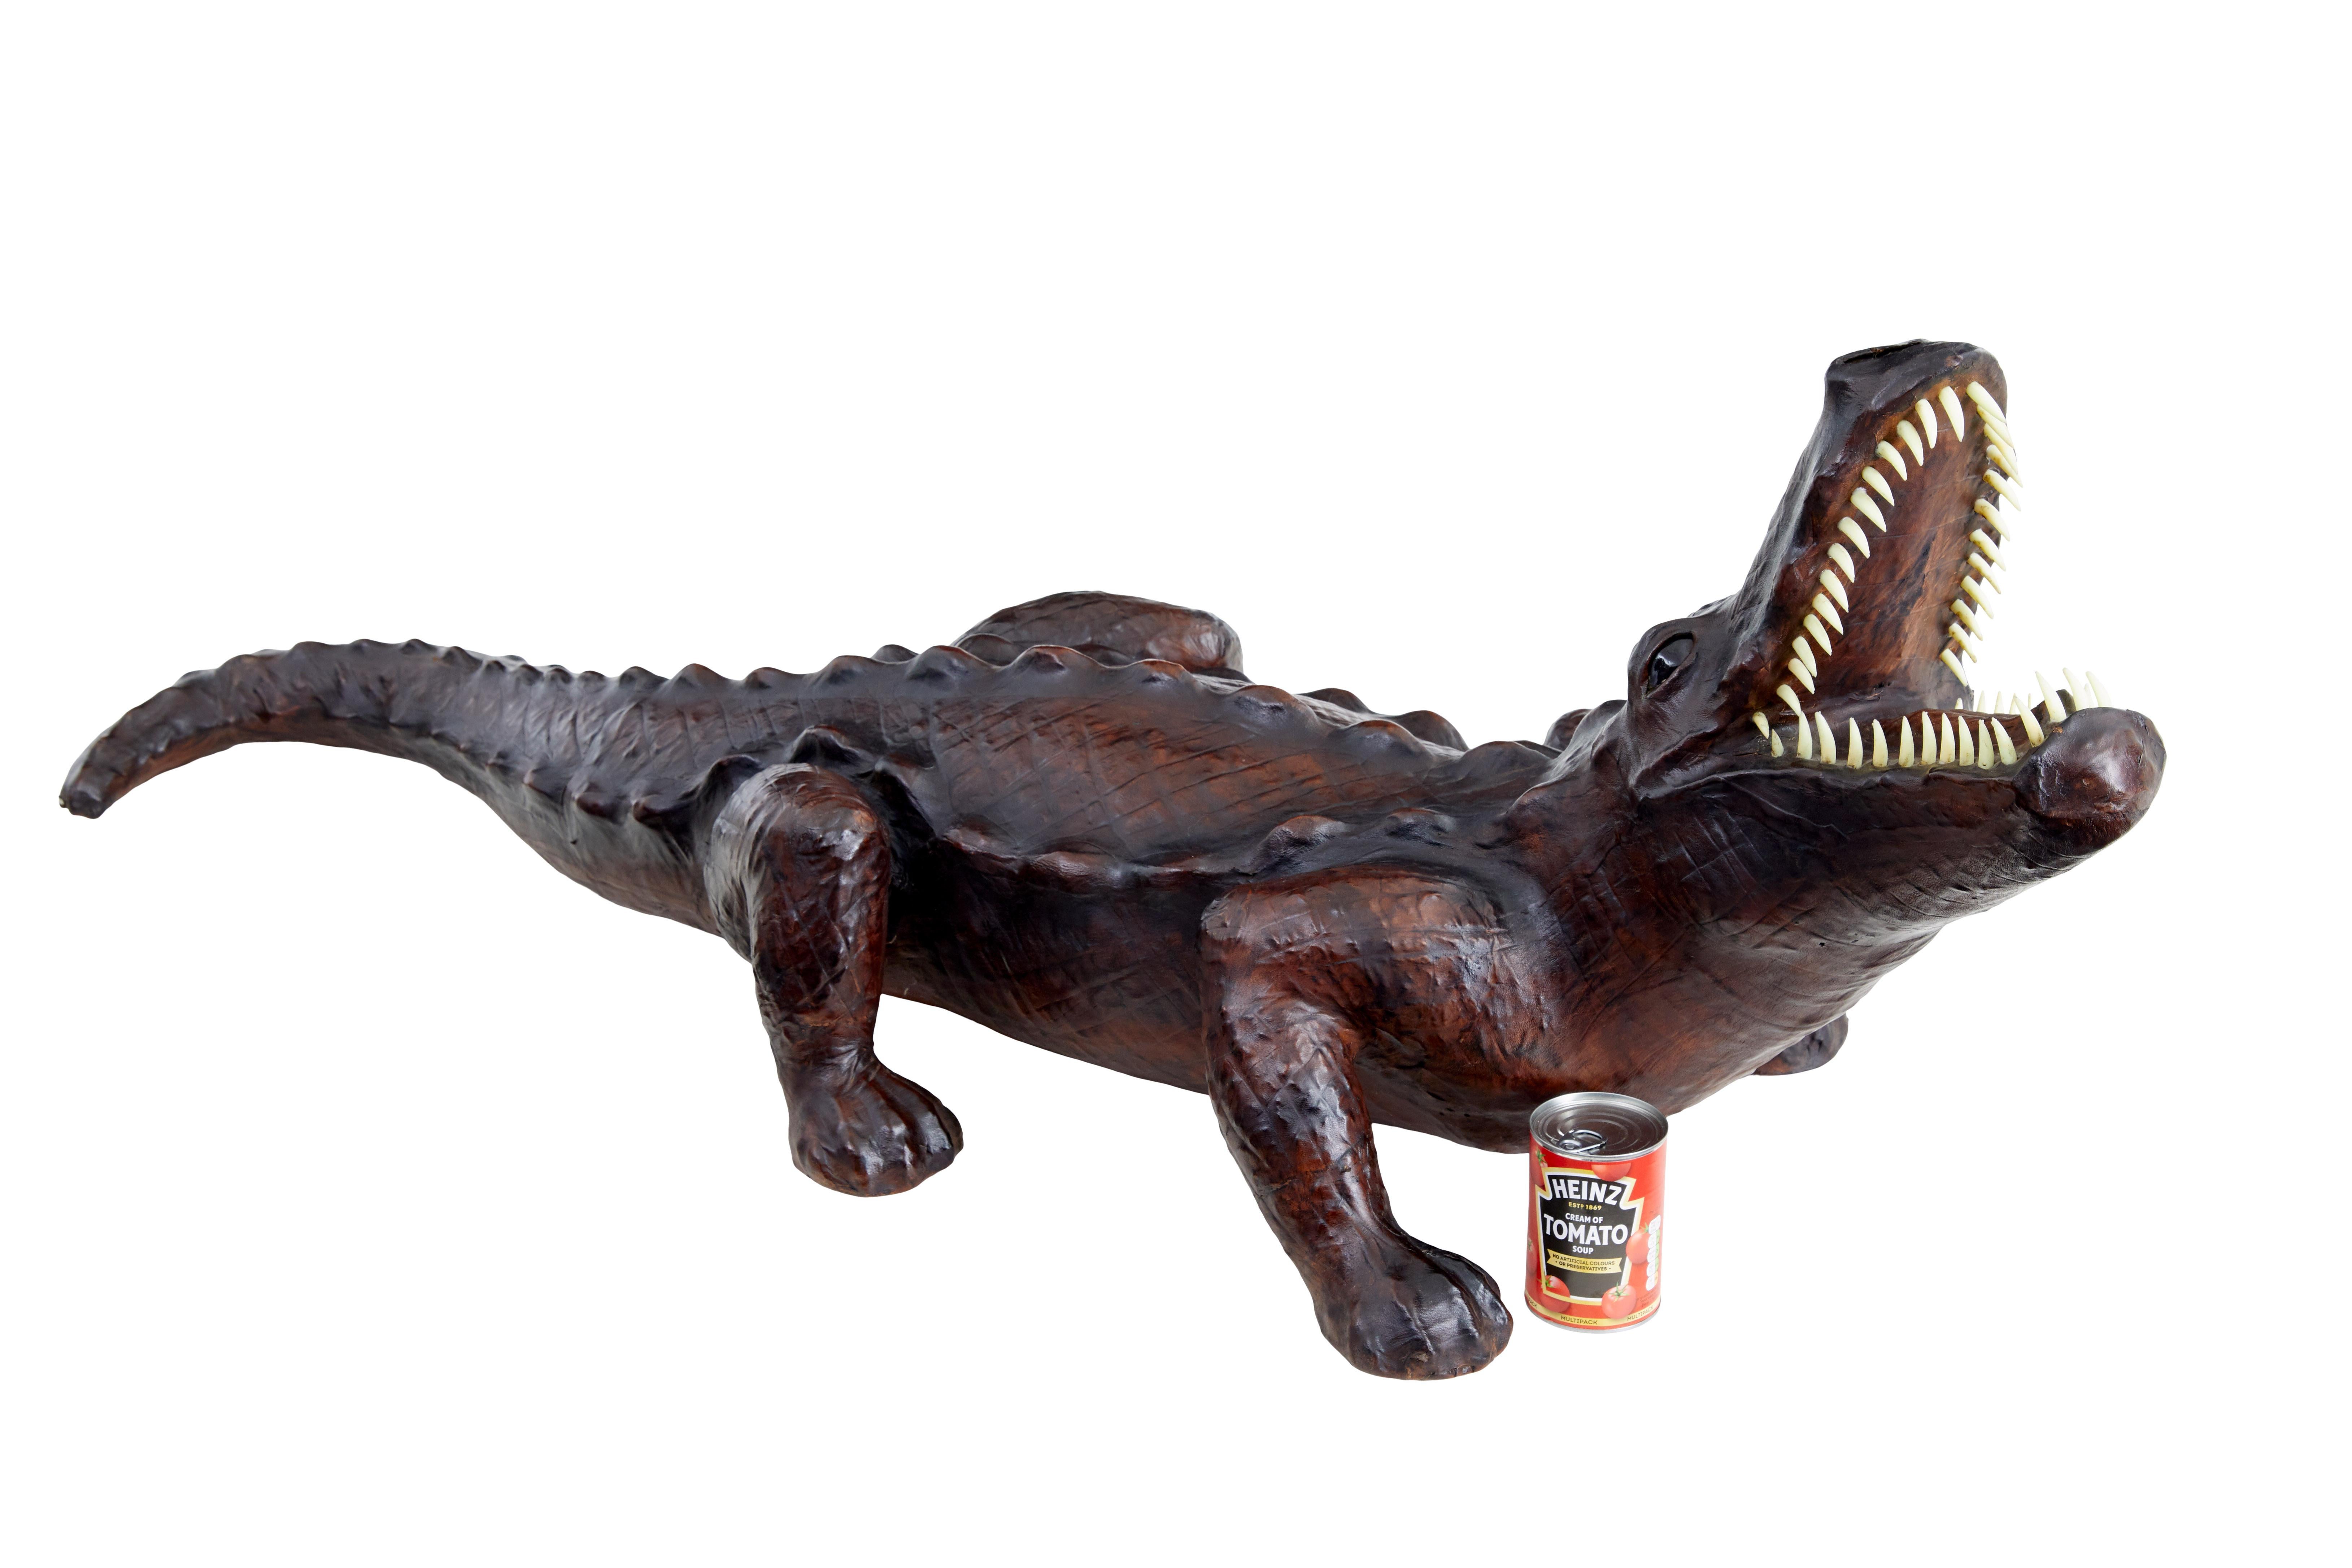 English 20th century decorative leather model of a crocodile For Sale